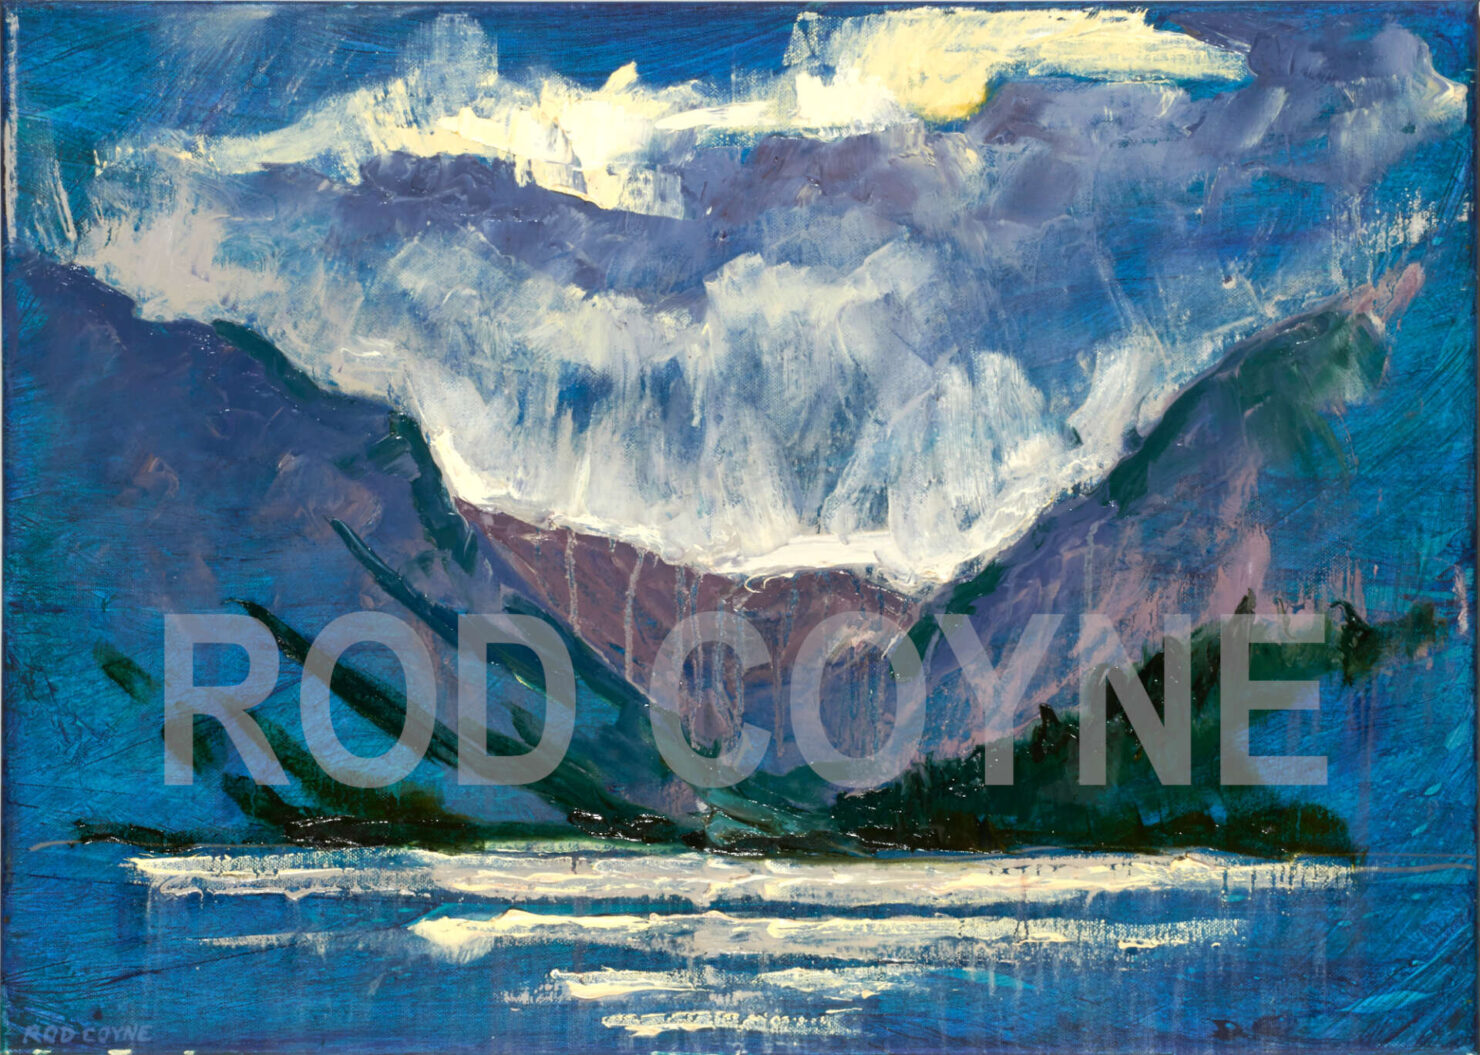 artist rod coyne's painting "glendalough, upper lake" is shown here, watermarked